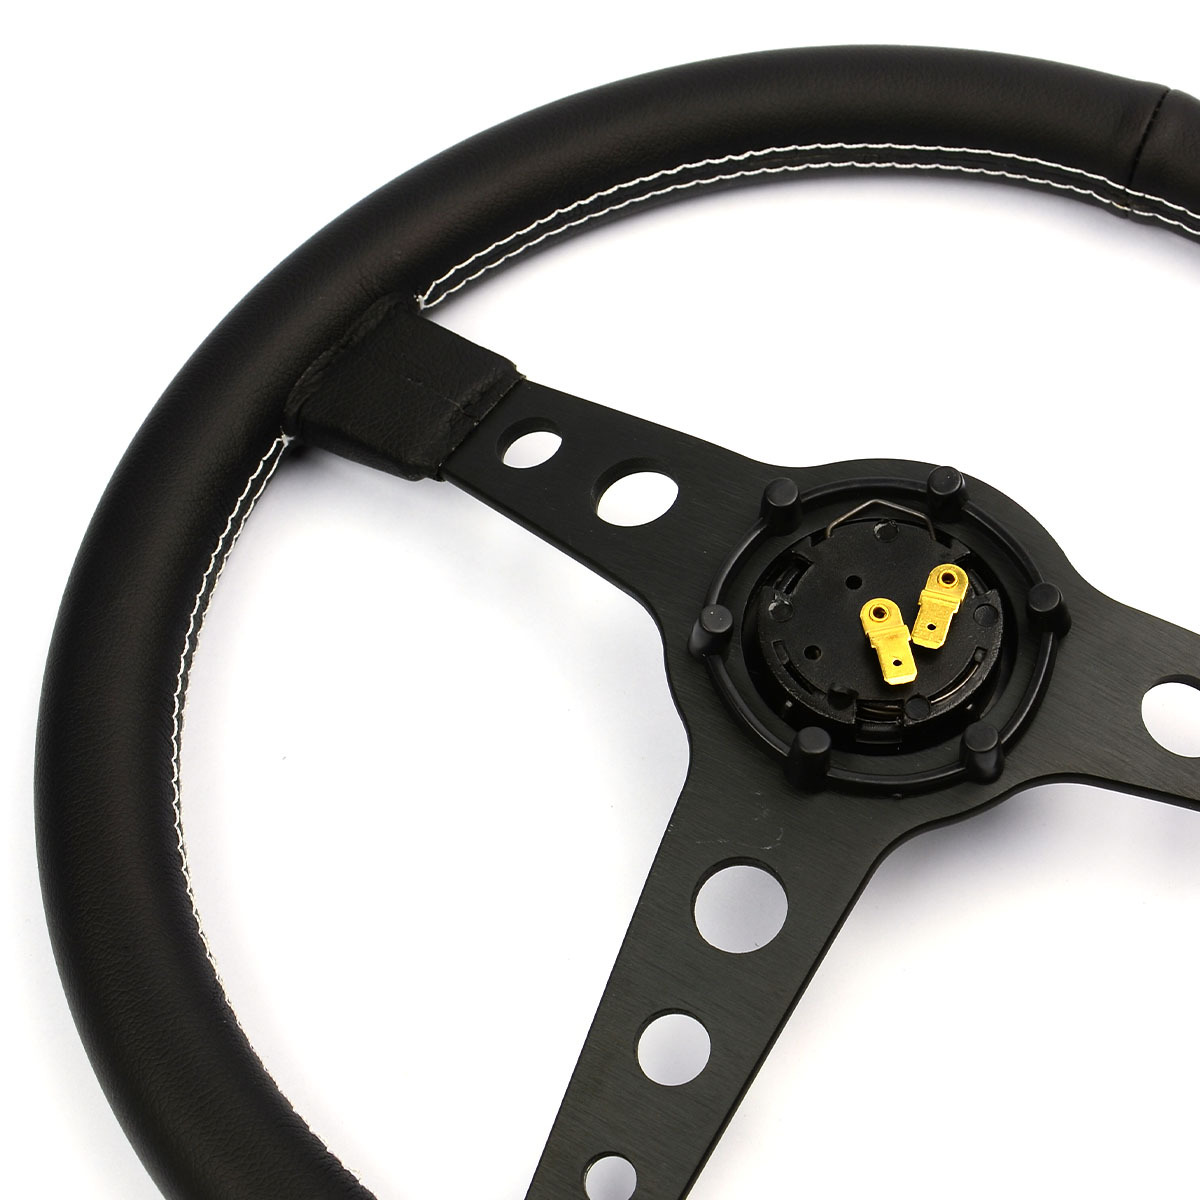 Steering Wheel Leatherette 14" ADR Retro Black Spoke White Stitching